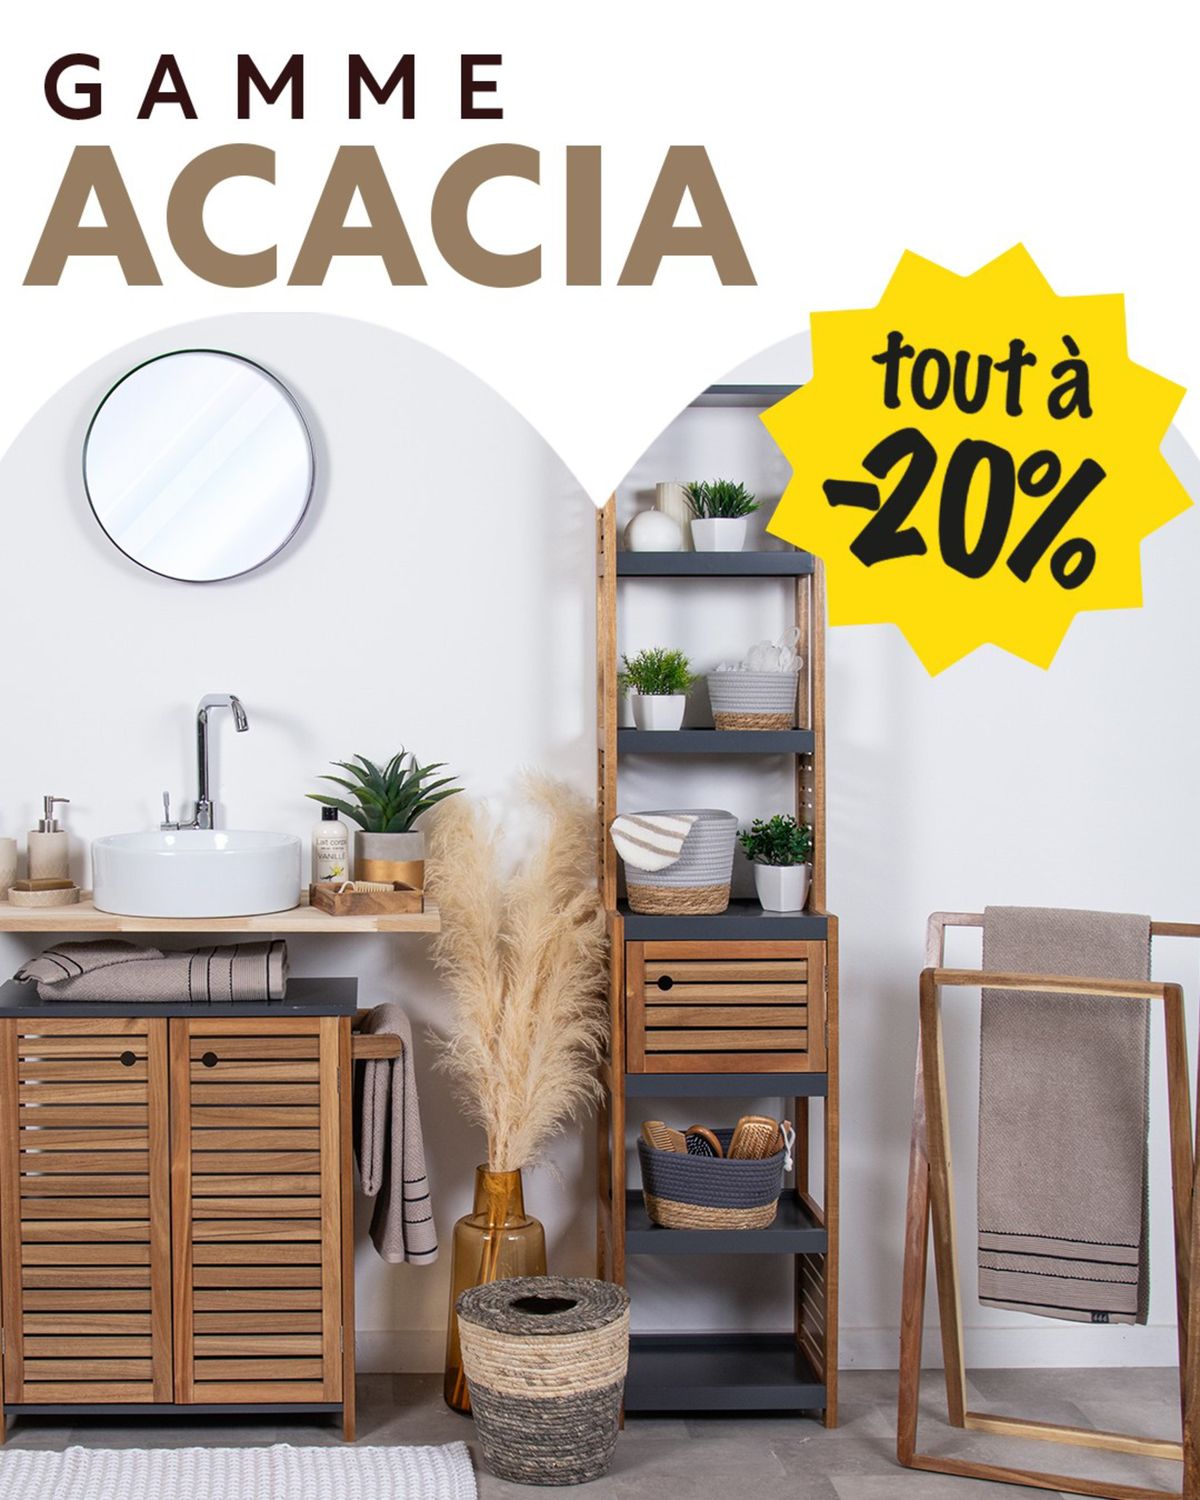 Catalogue Gamme acacia tour à -20%, page 00001